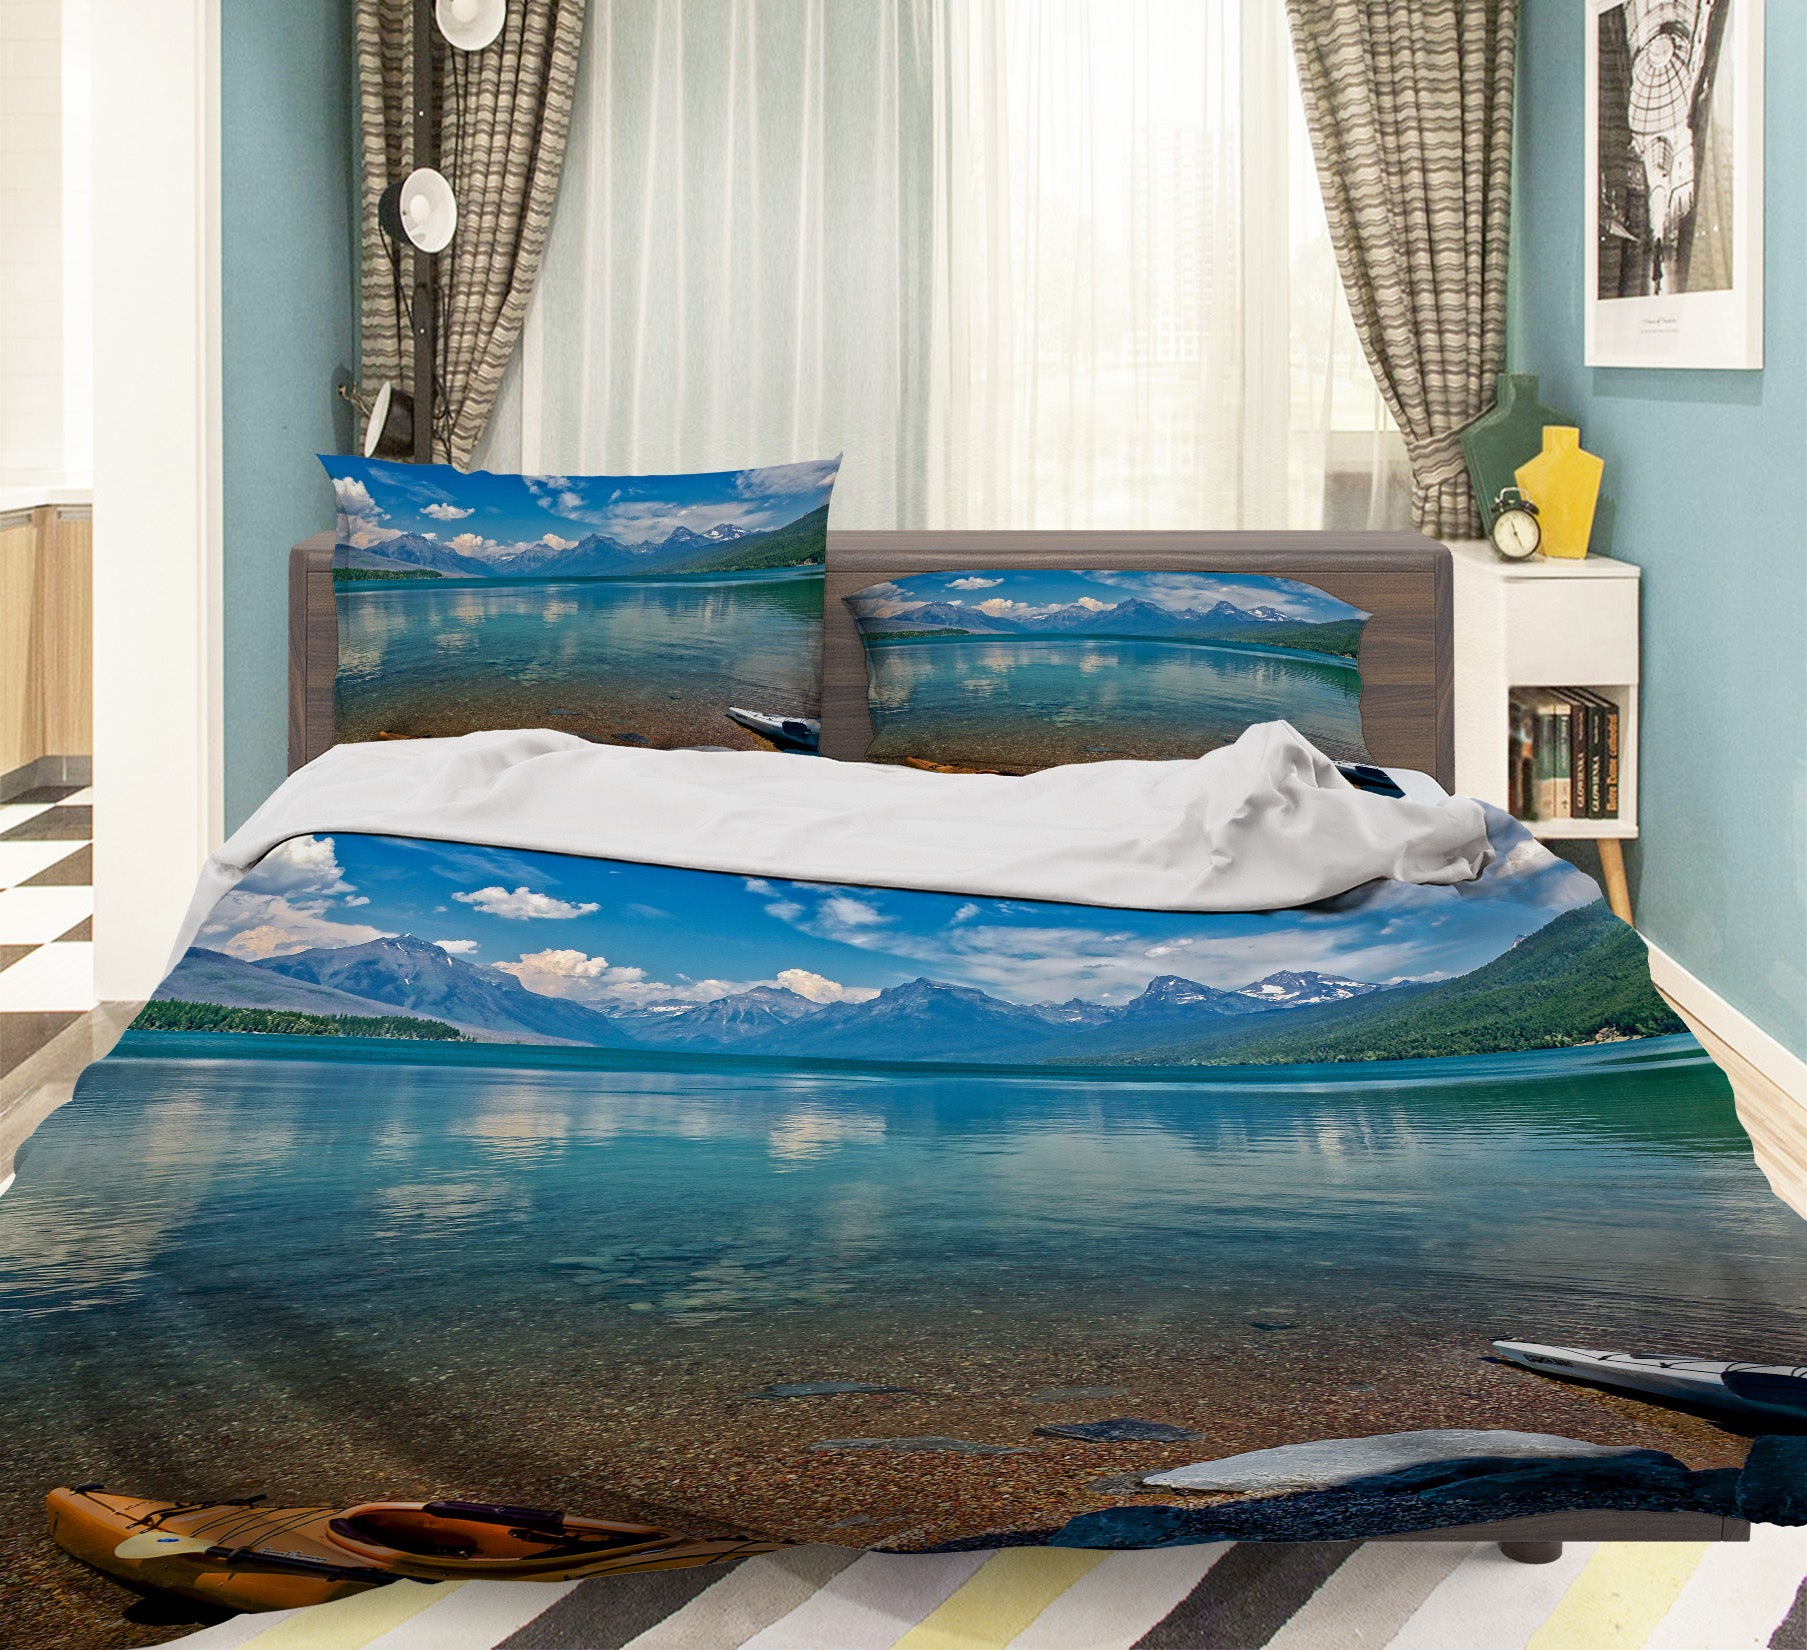 3D Landscape 8679 Kathy Barefield Bedding Bed Pillowcases Quilt